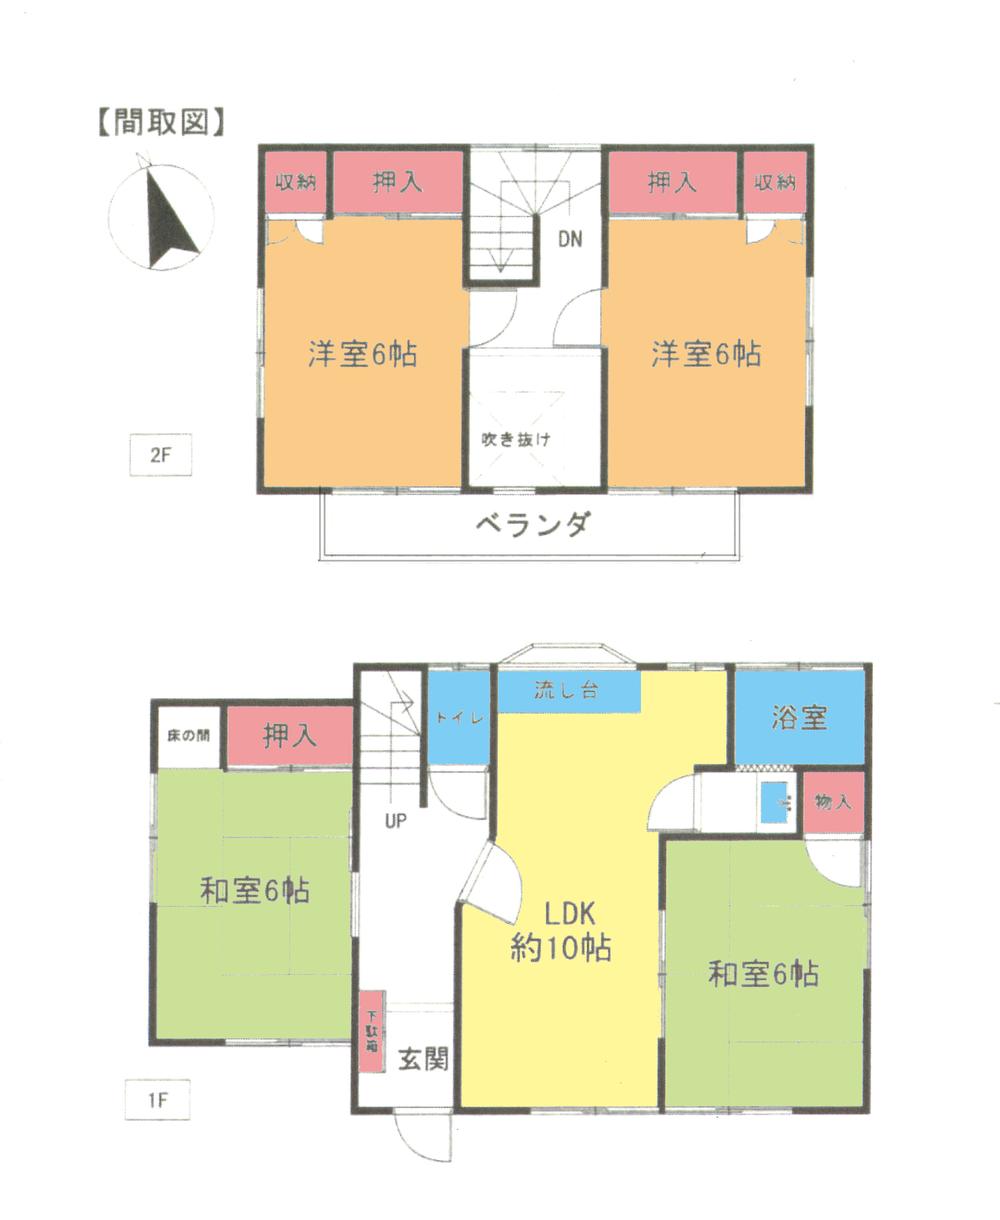 Floor plan. 23.8 million yen, 4LDK, Land area 148.76 sq m , Building area 83.2 sq m floor plan